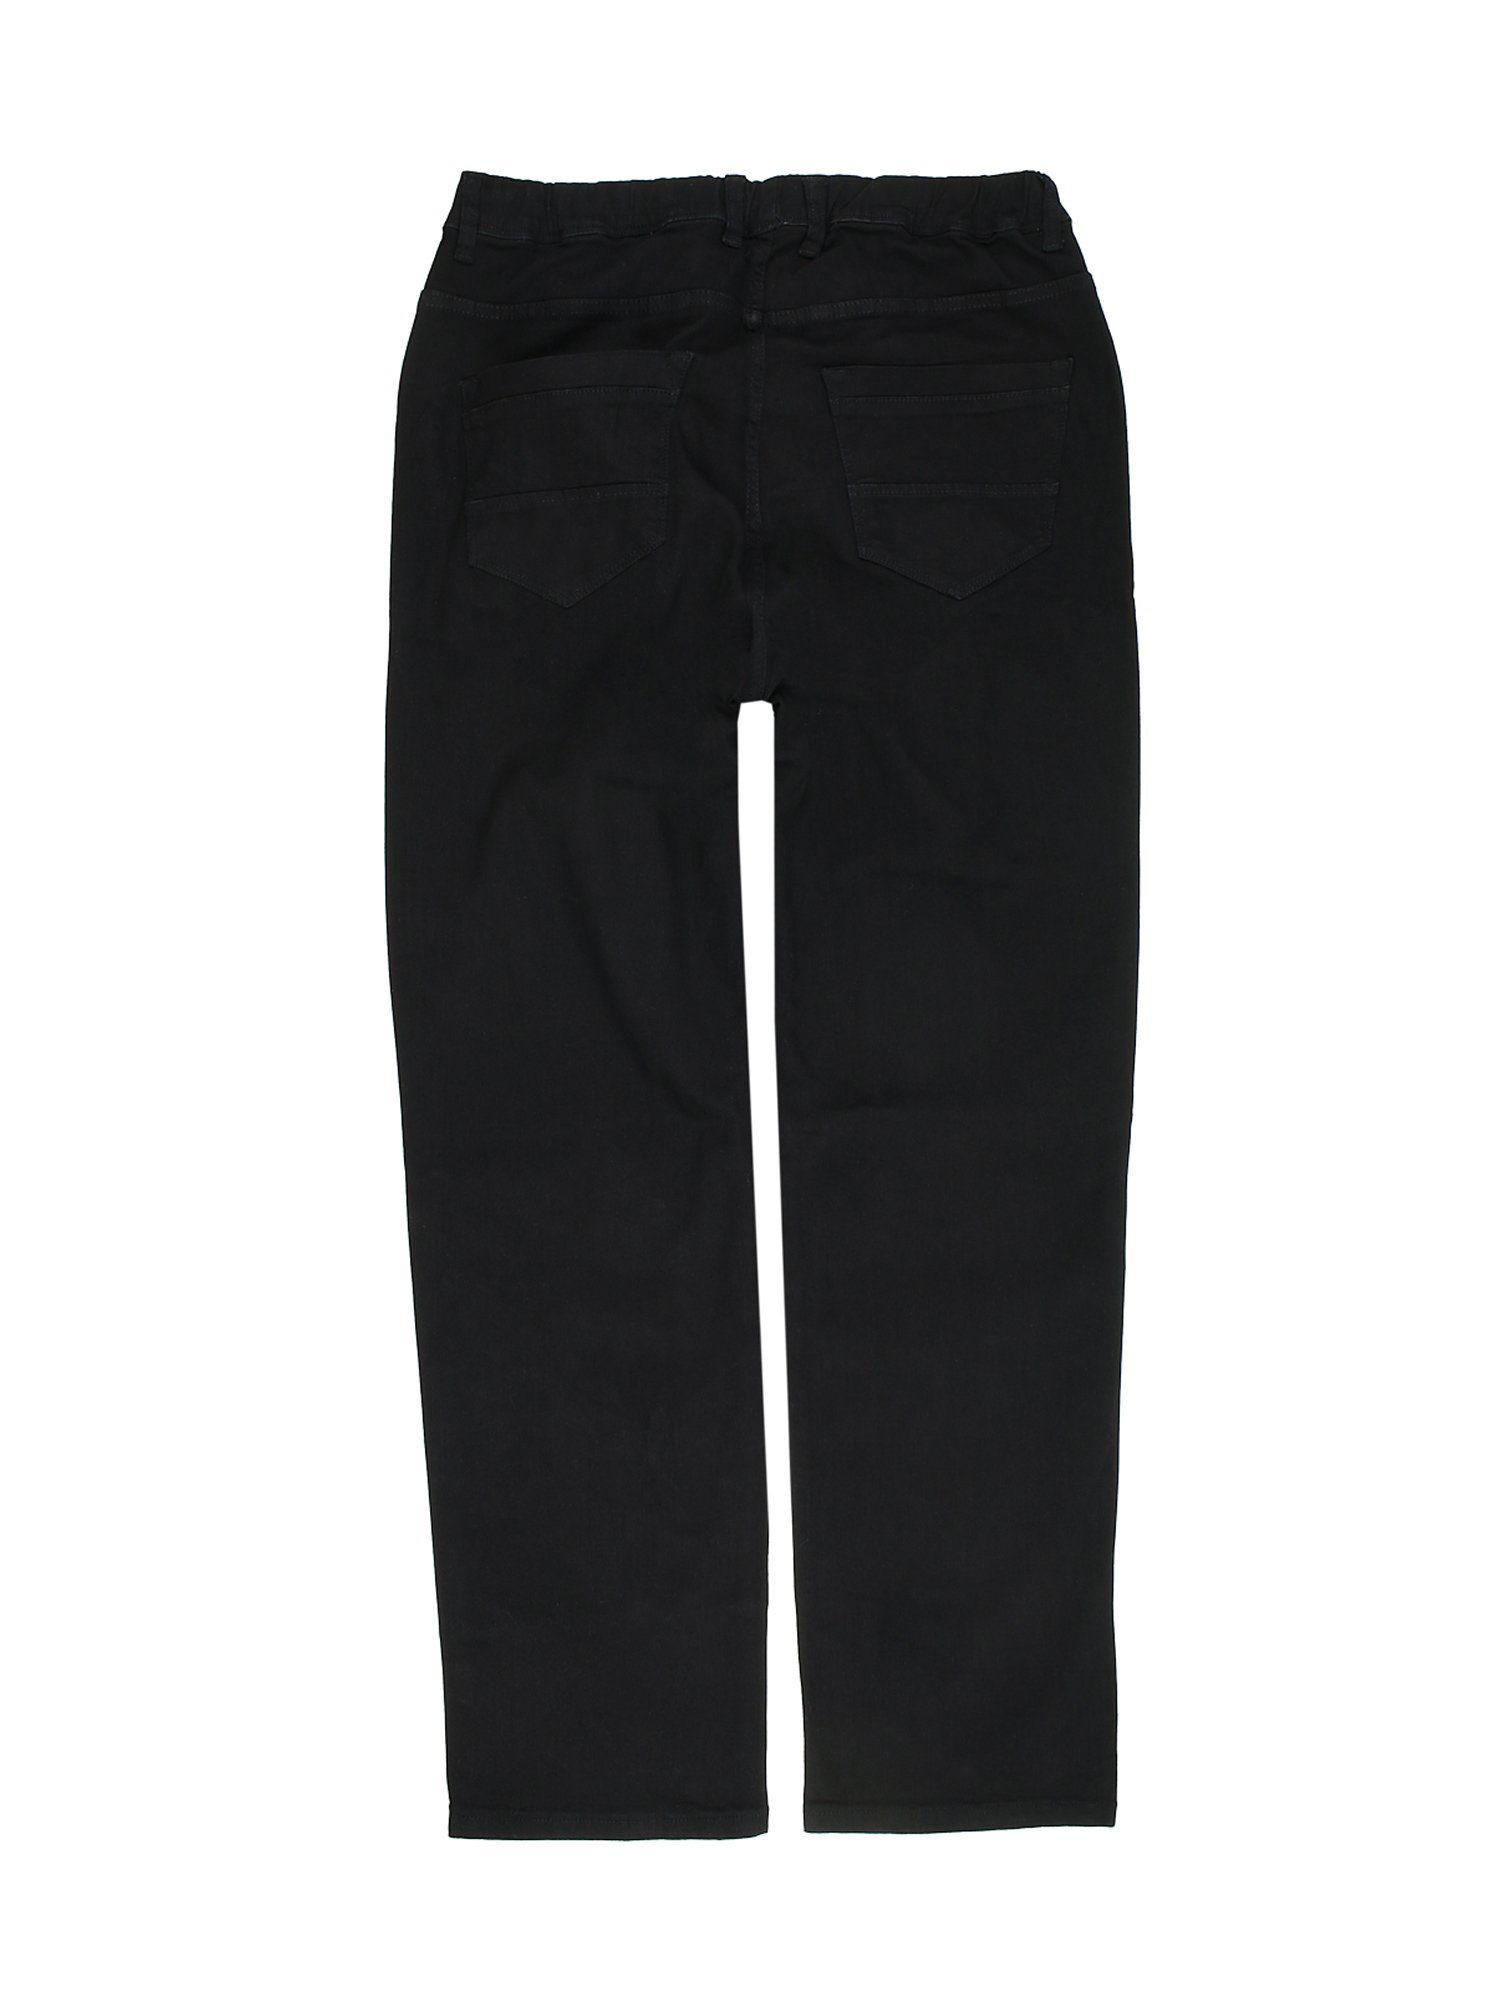 Jeanshose Hose Herren schwarz Übergrößen LV-502 Comfort-fit-Jeans im Sweat Jeans Jogger-Stil Lavecchia